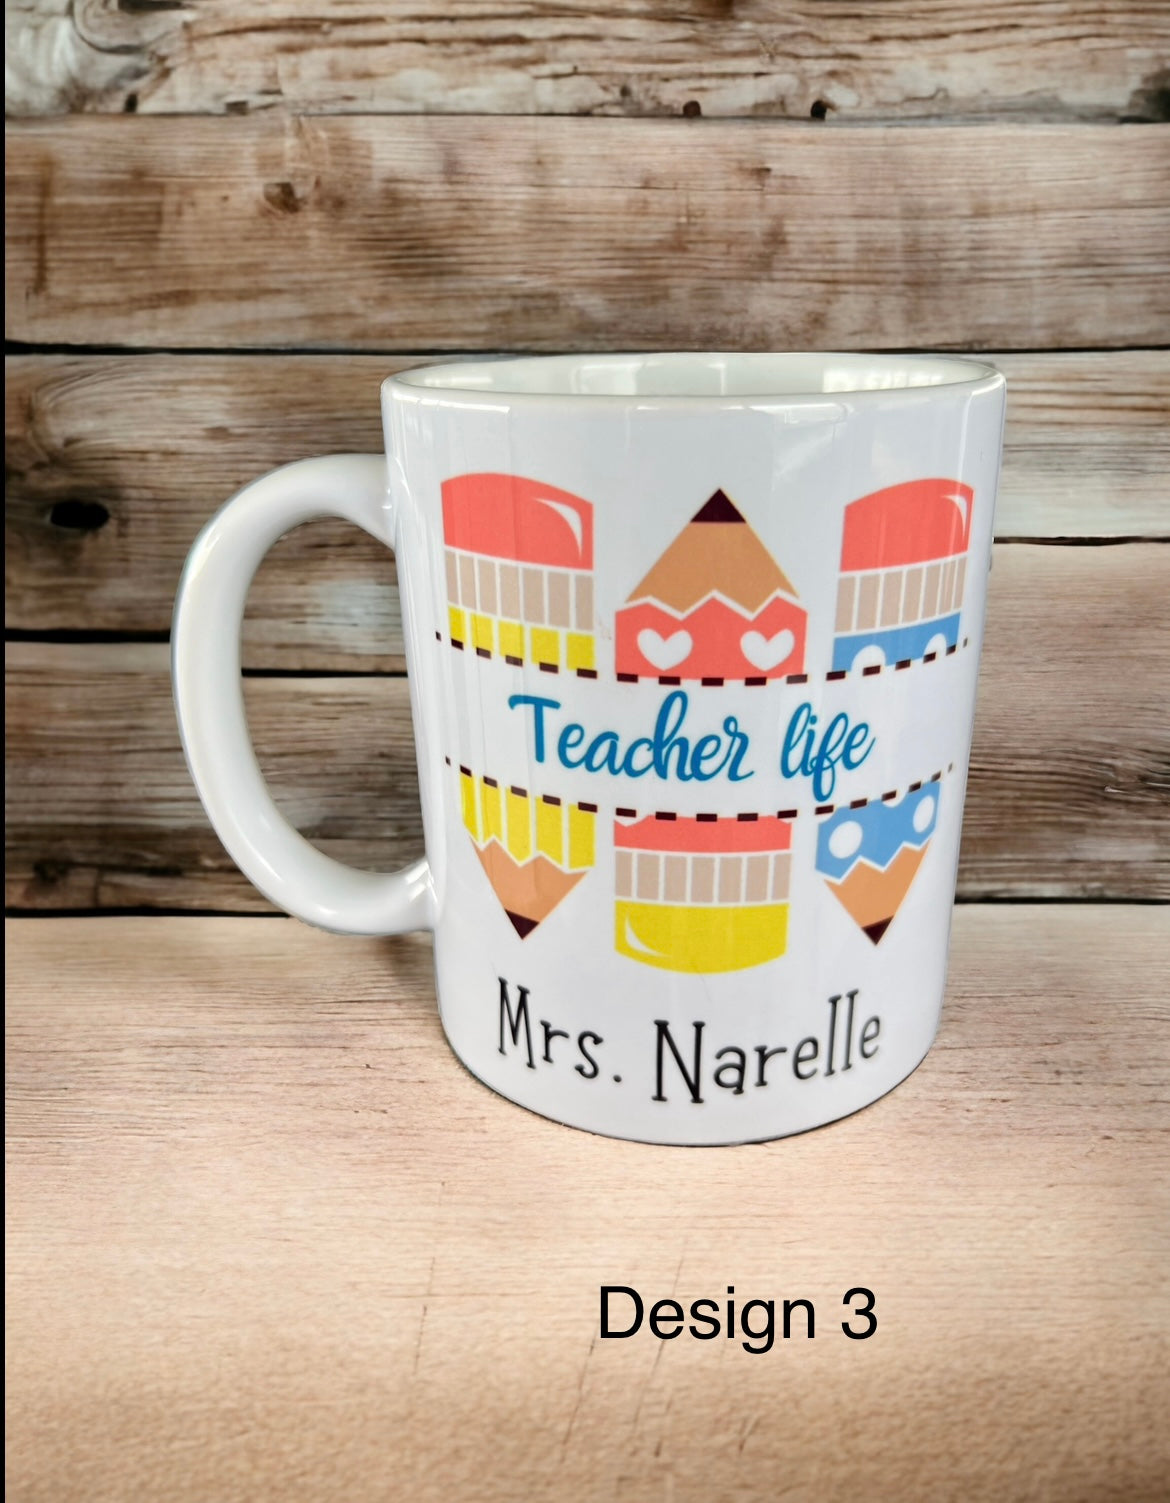 Teachers cake in a mug set